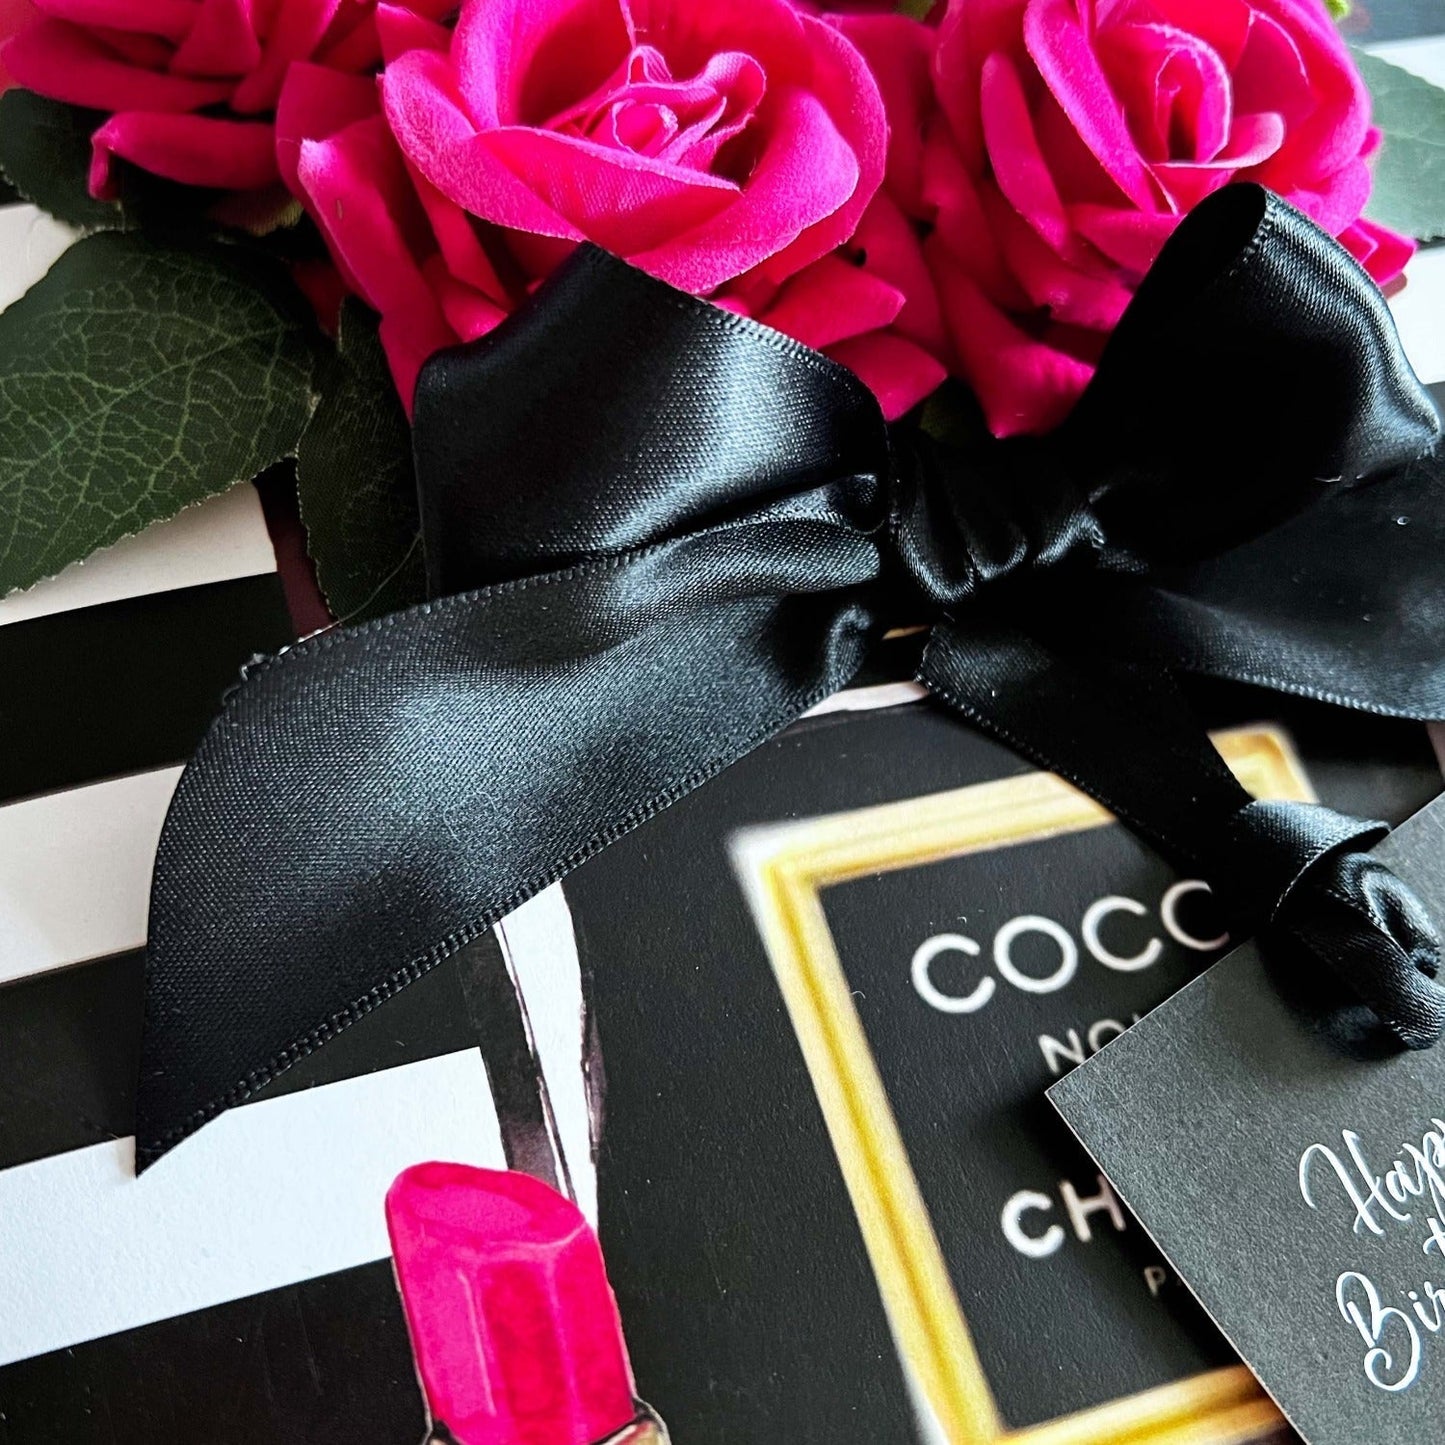 pink lipstick and perfume 40th luxury handmade cards